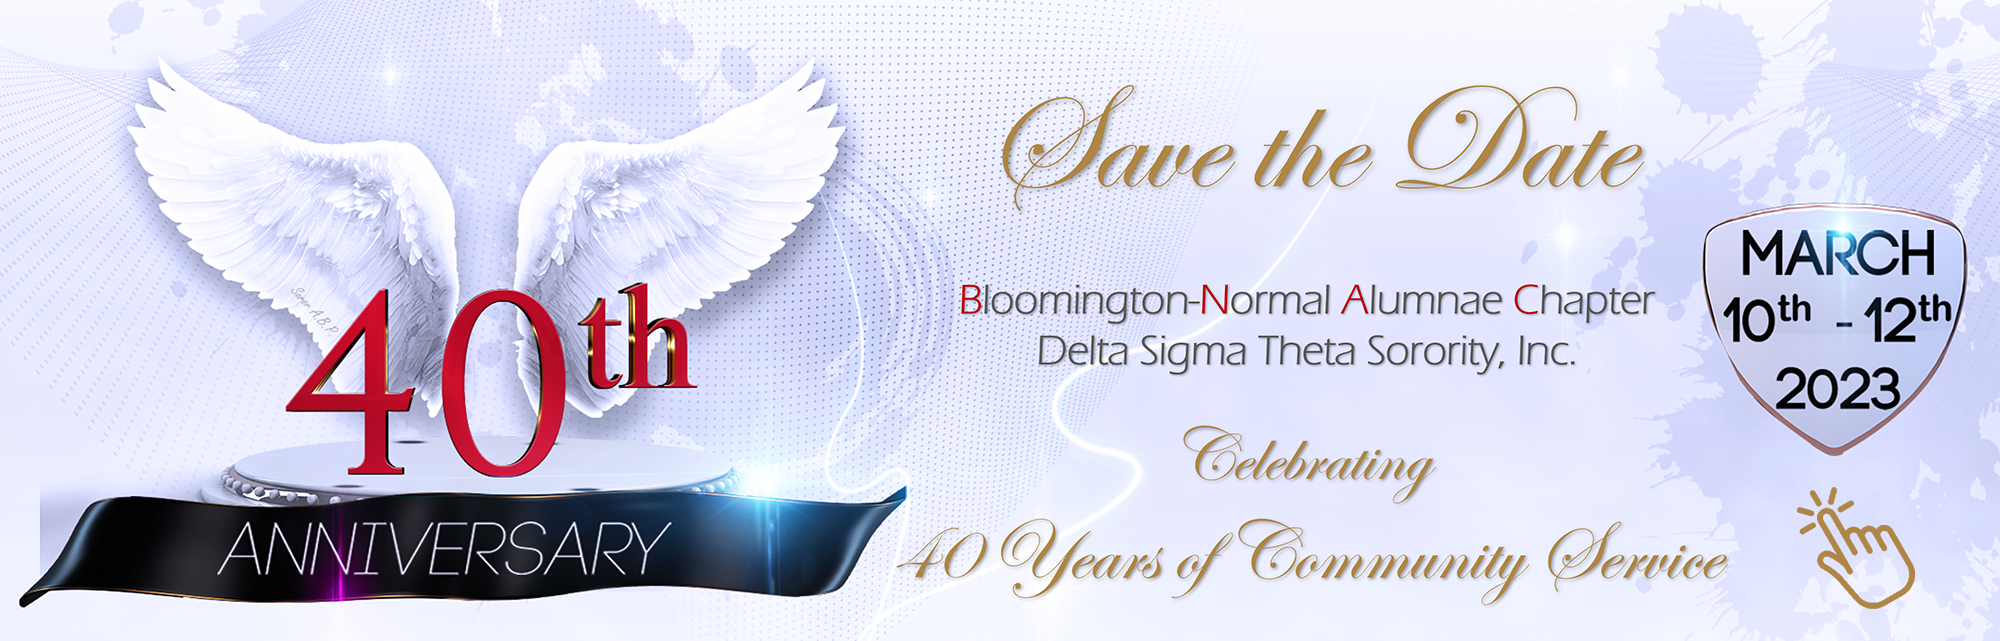 BNAC 40th Anniversary March 10-12, 2022